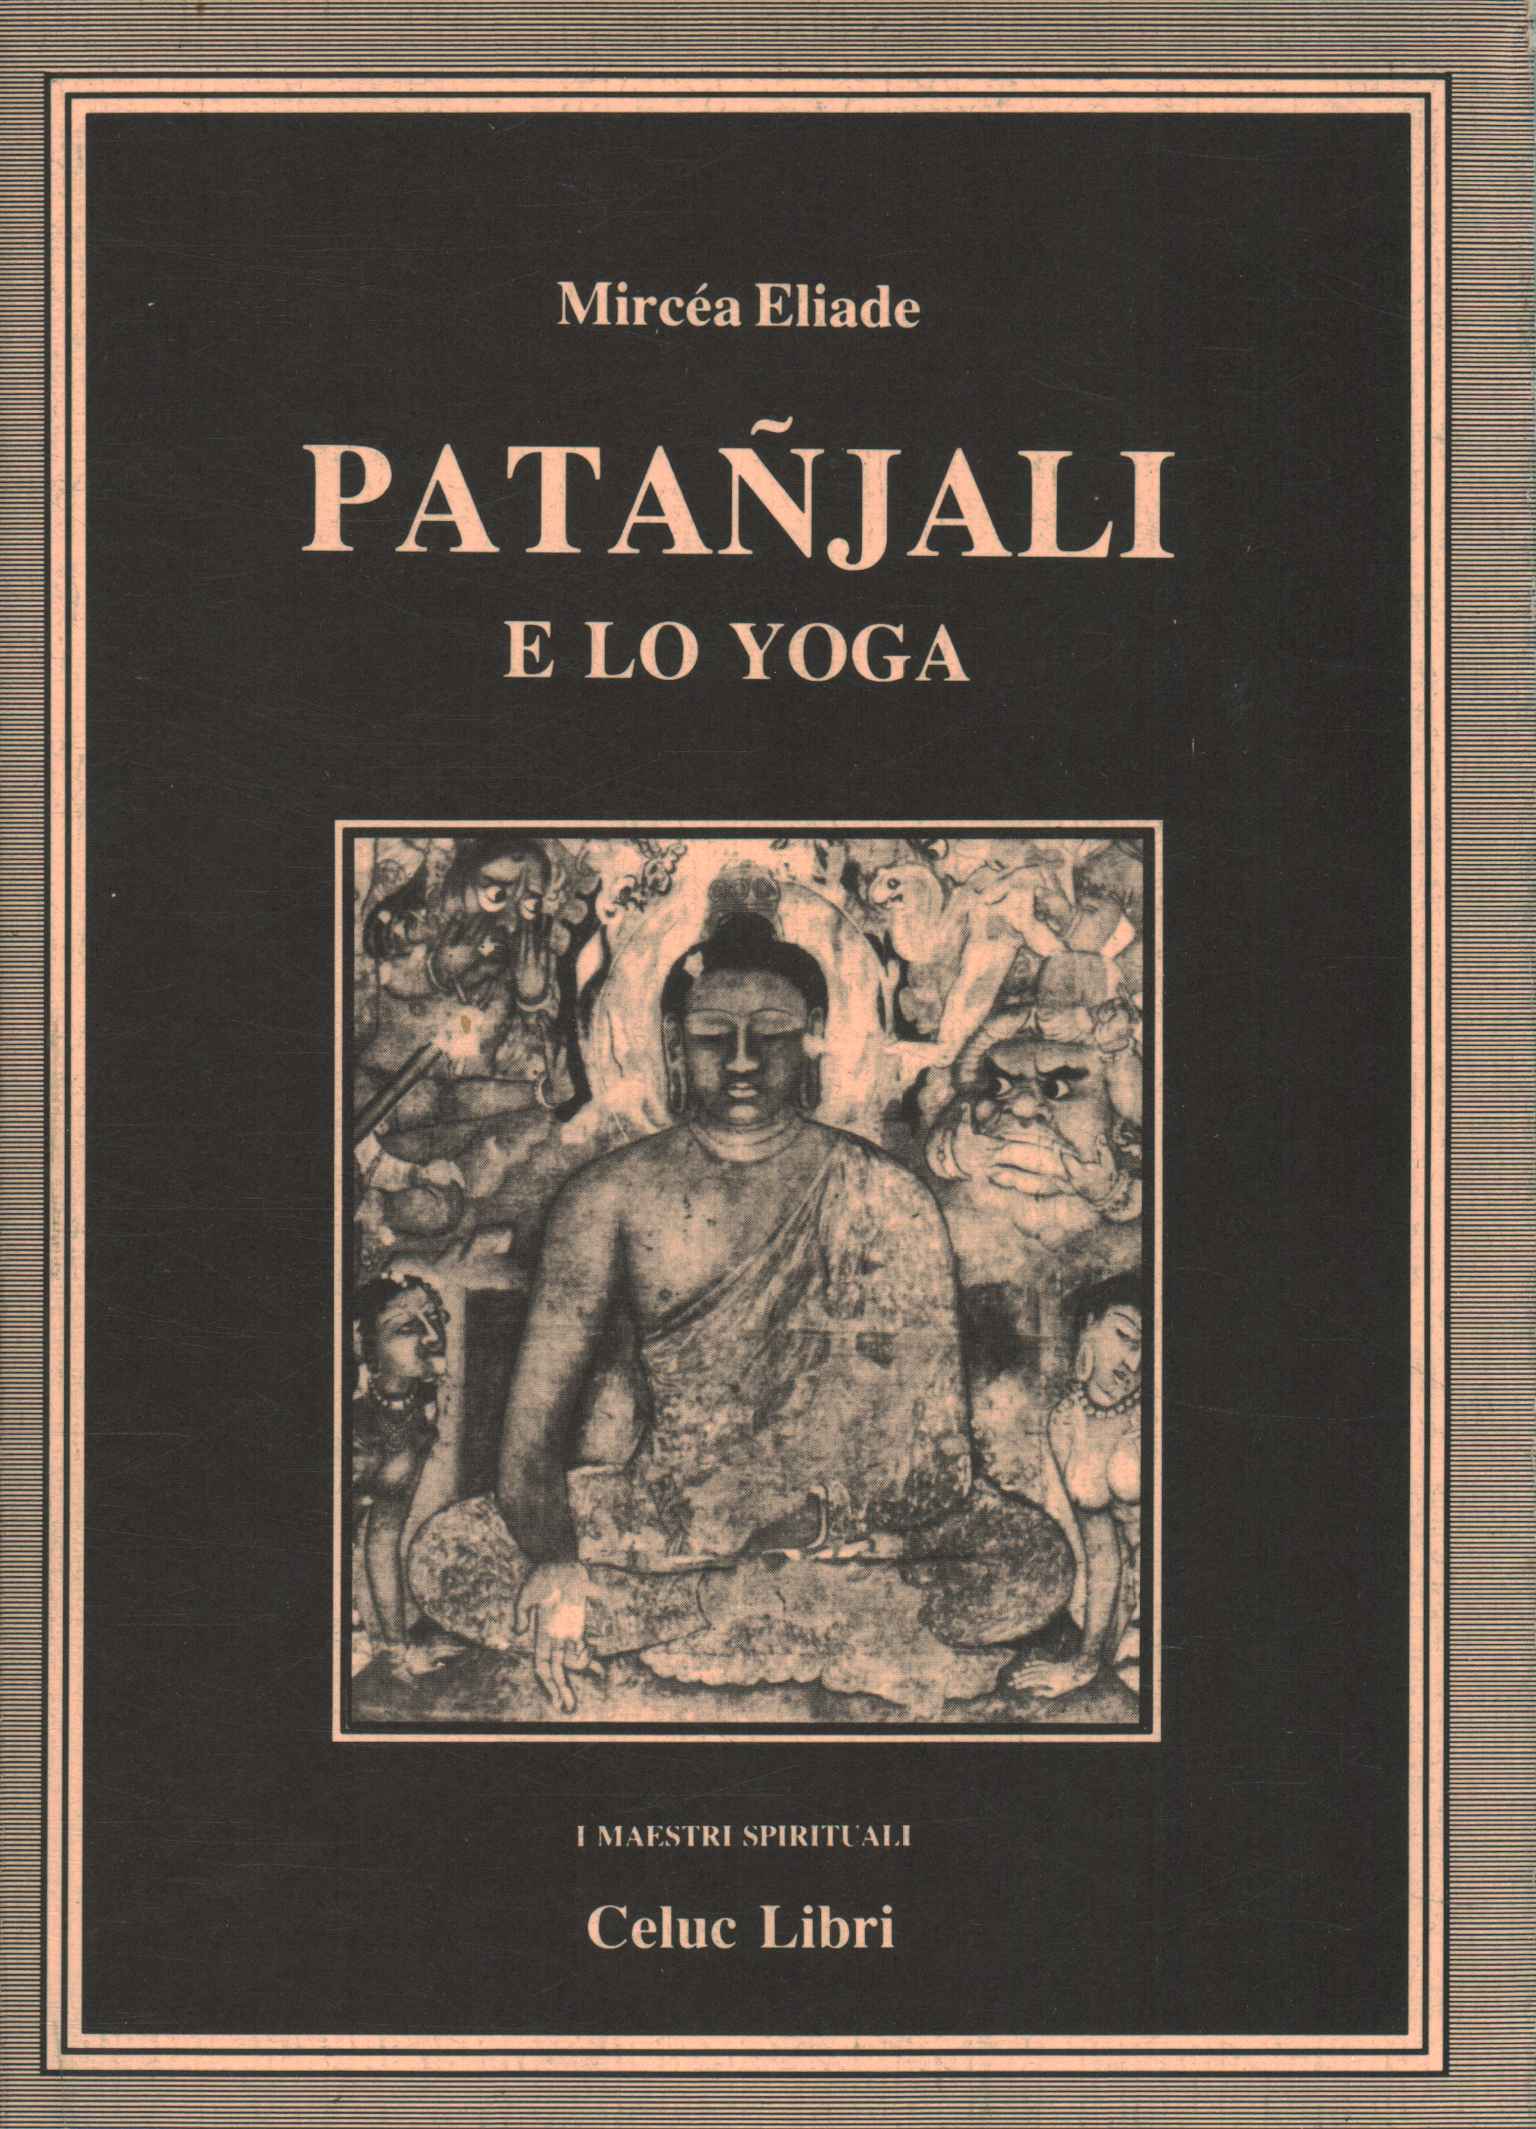 Patanjali und Yoga